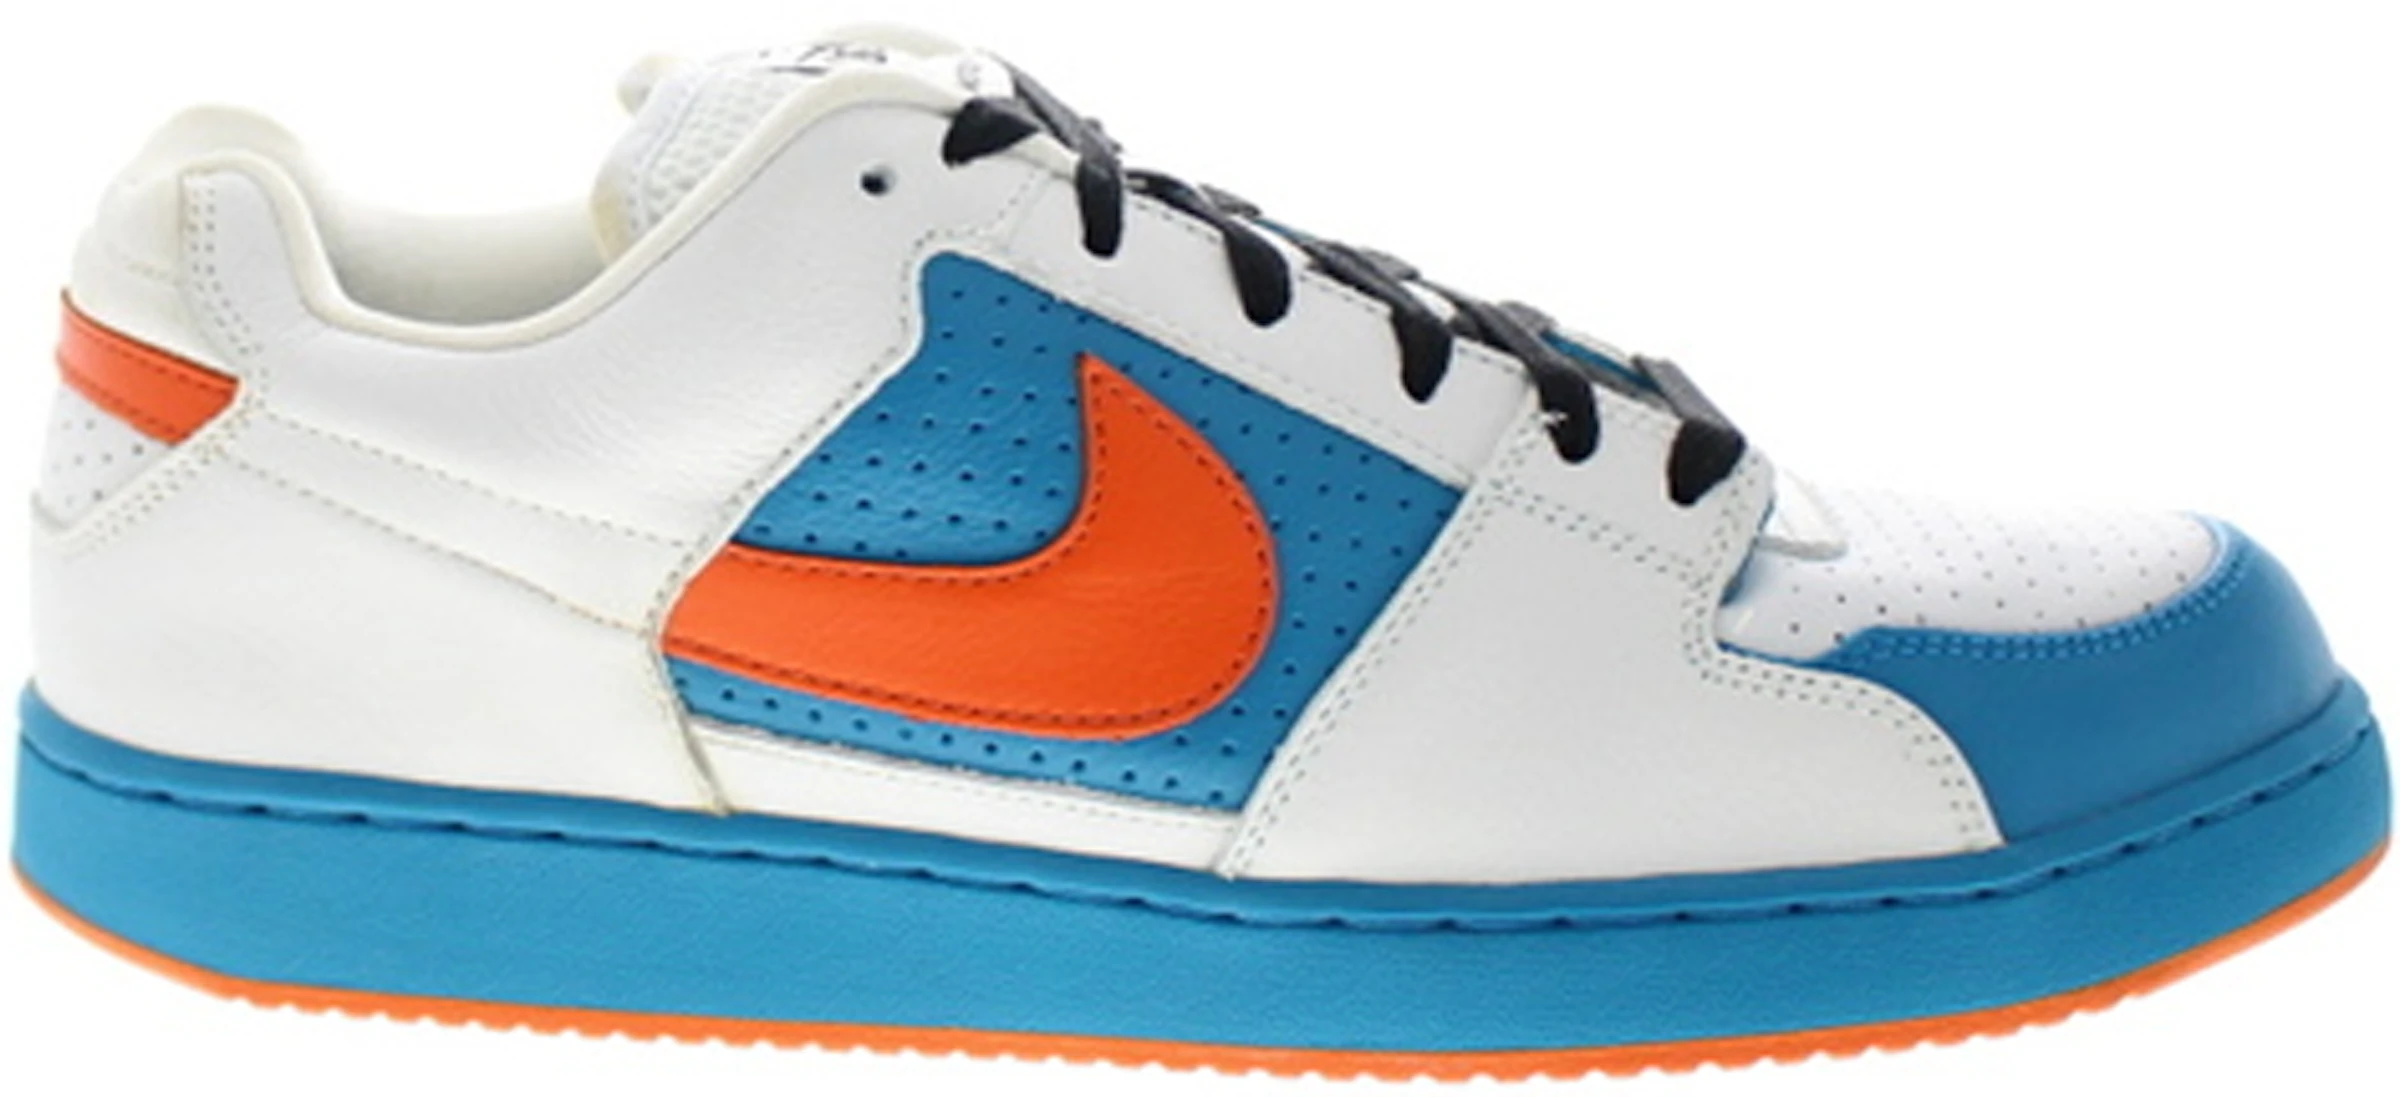 Aparador formar caja Nike SB Zoom Team Edition Neo Turquoise Orange Blaze - 311665-481 - ES